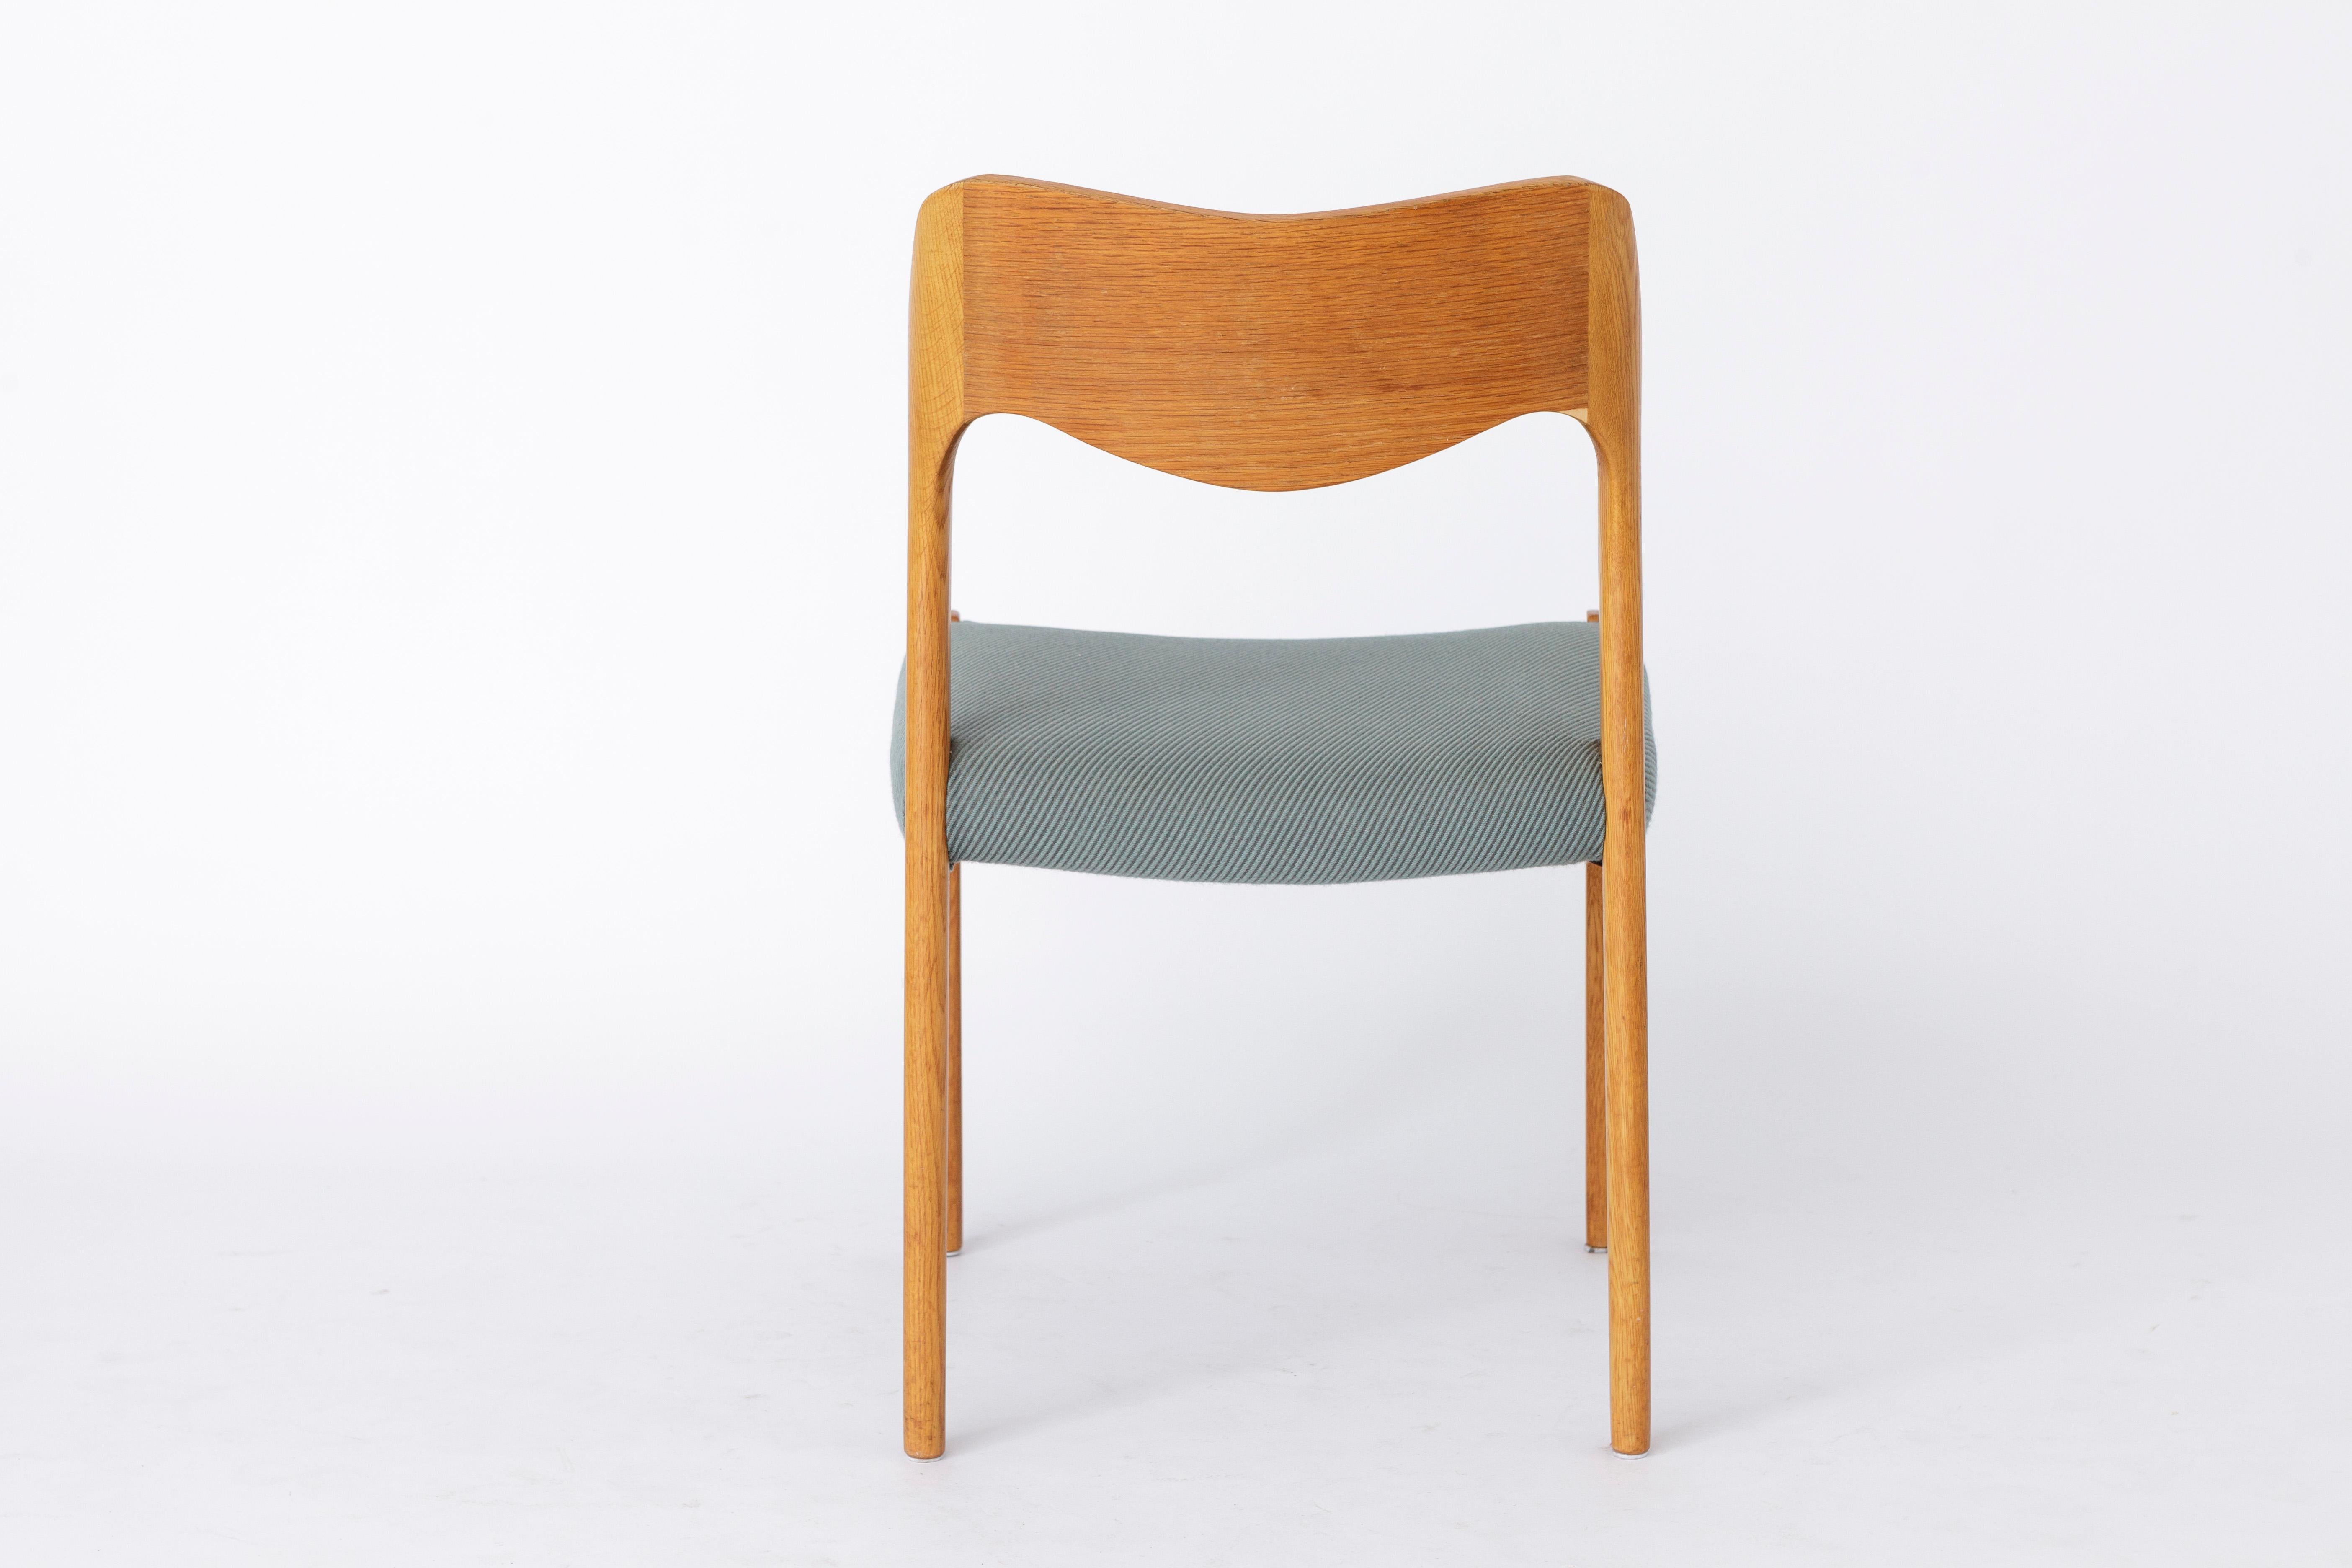 Teak 1 of 2 Niels Moller Chair, model 71 Oak, 1950s Vintage Danish